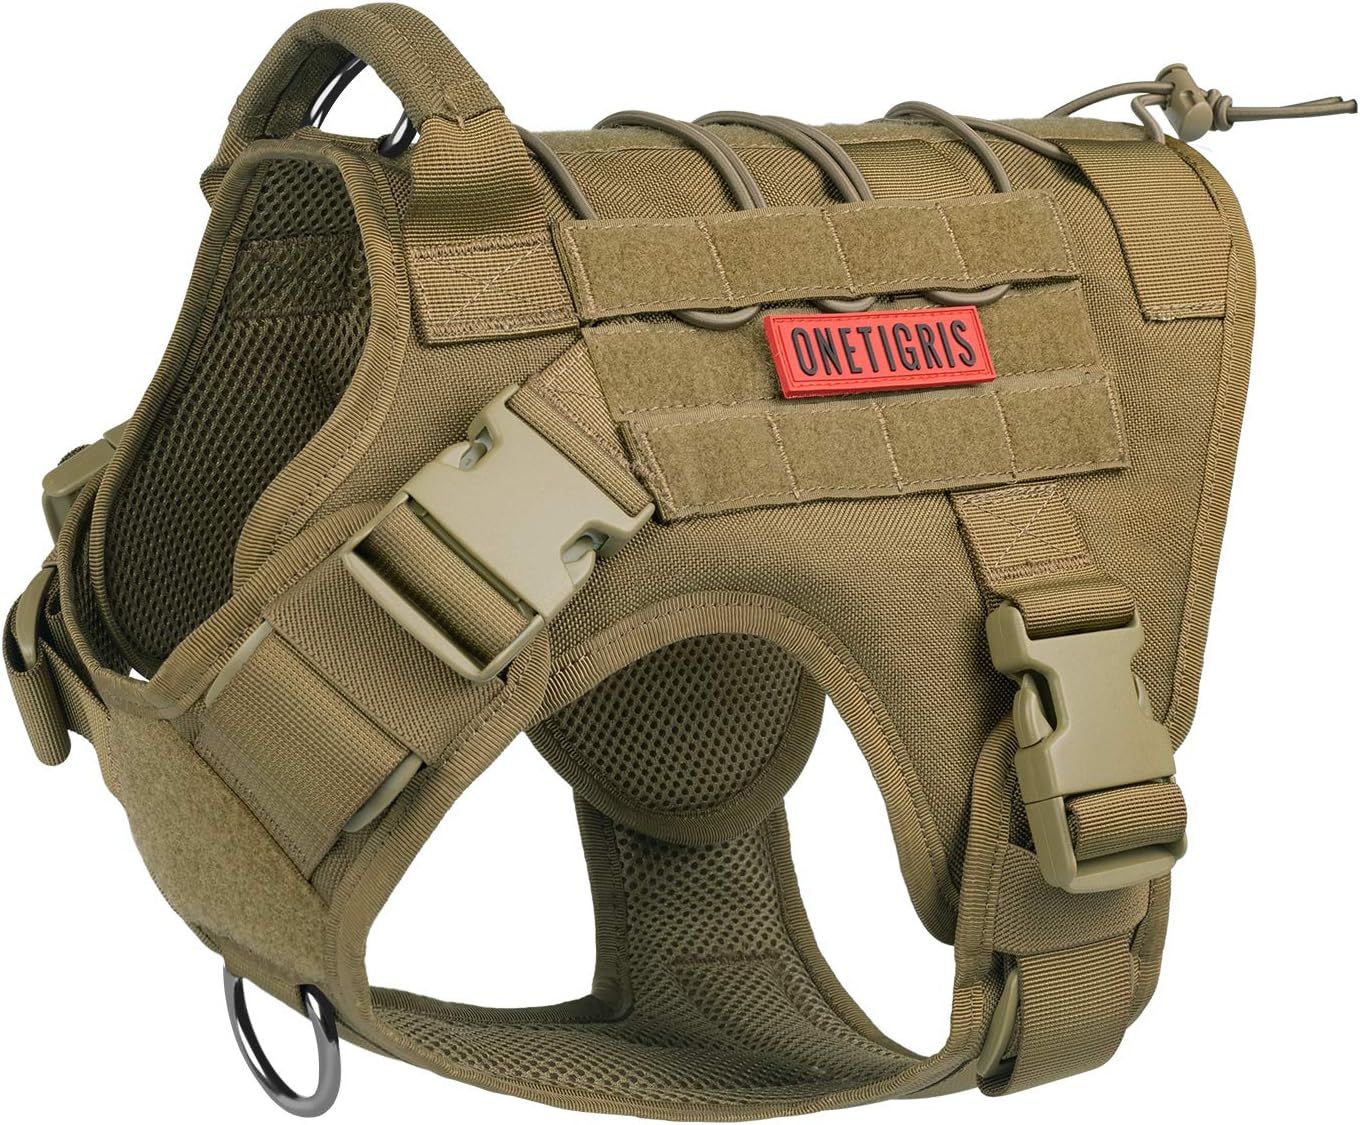 OneTigris Tactical Dog Harness Vest Review